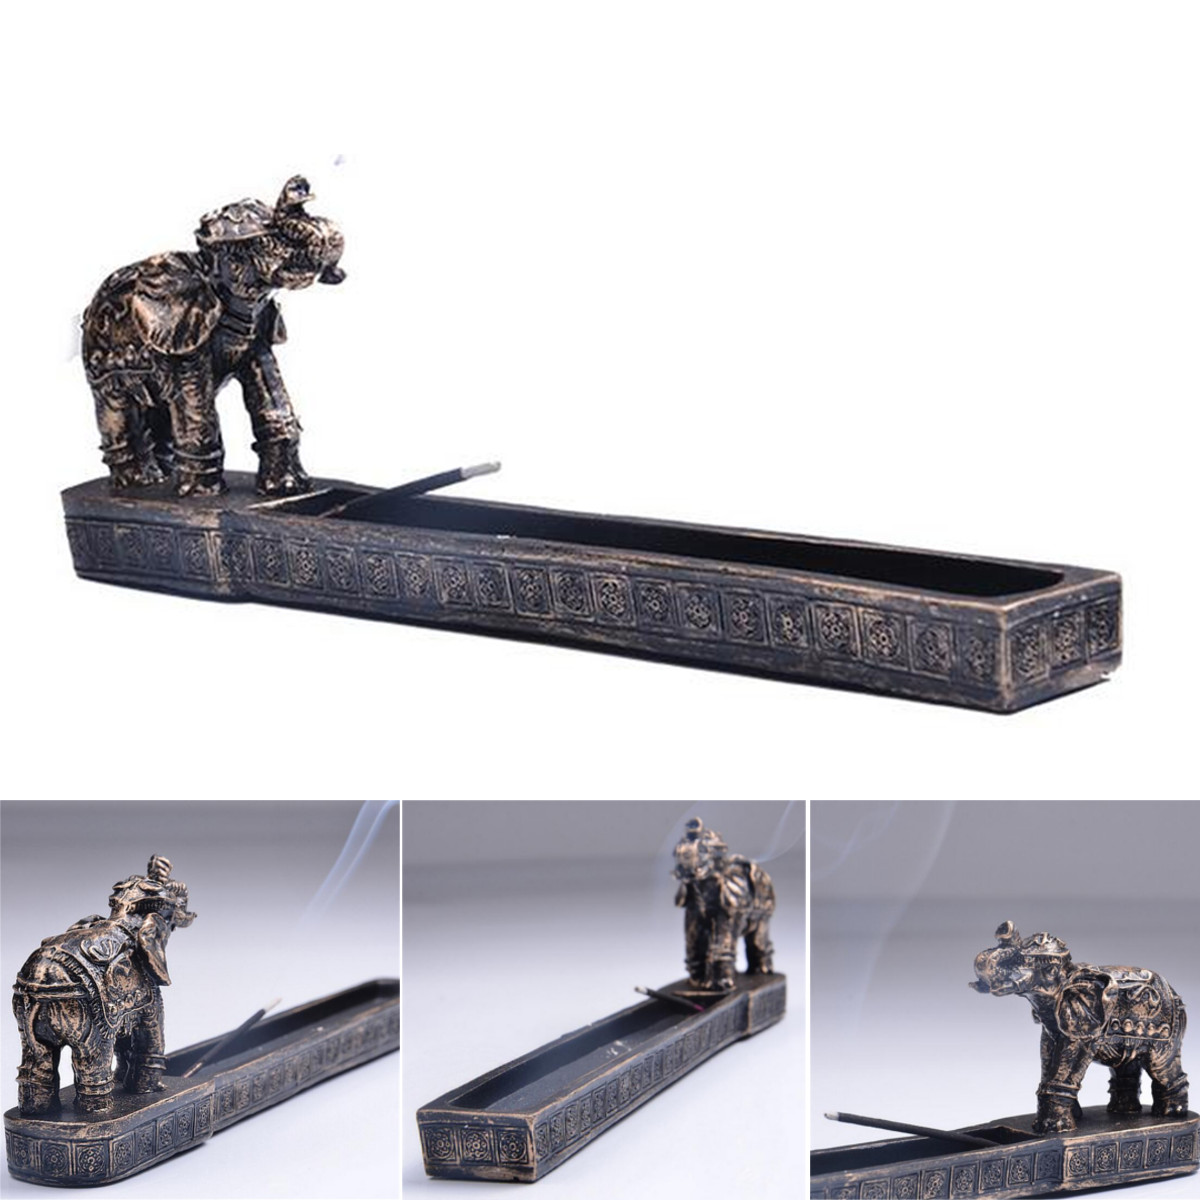 

Elephant God Design Incense Burner Joss Stick Holder Resin Figurine Statue Home Room Decor